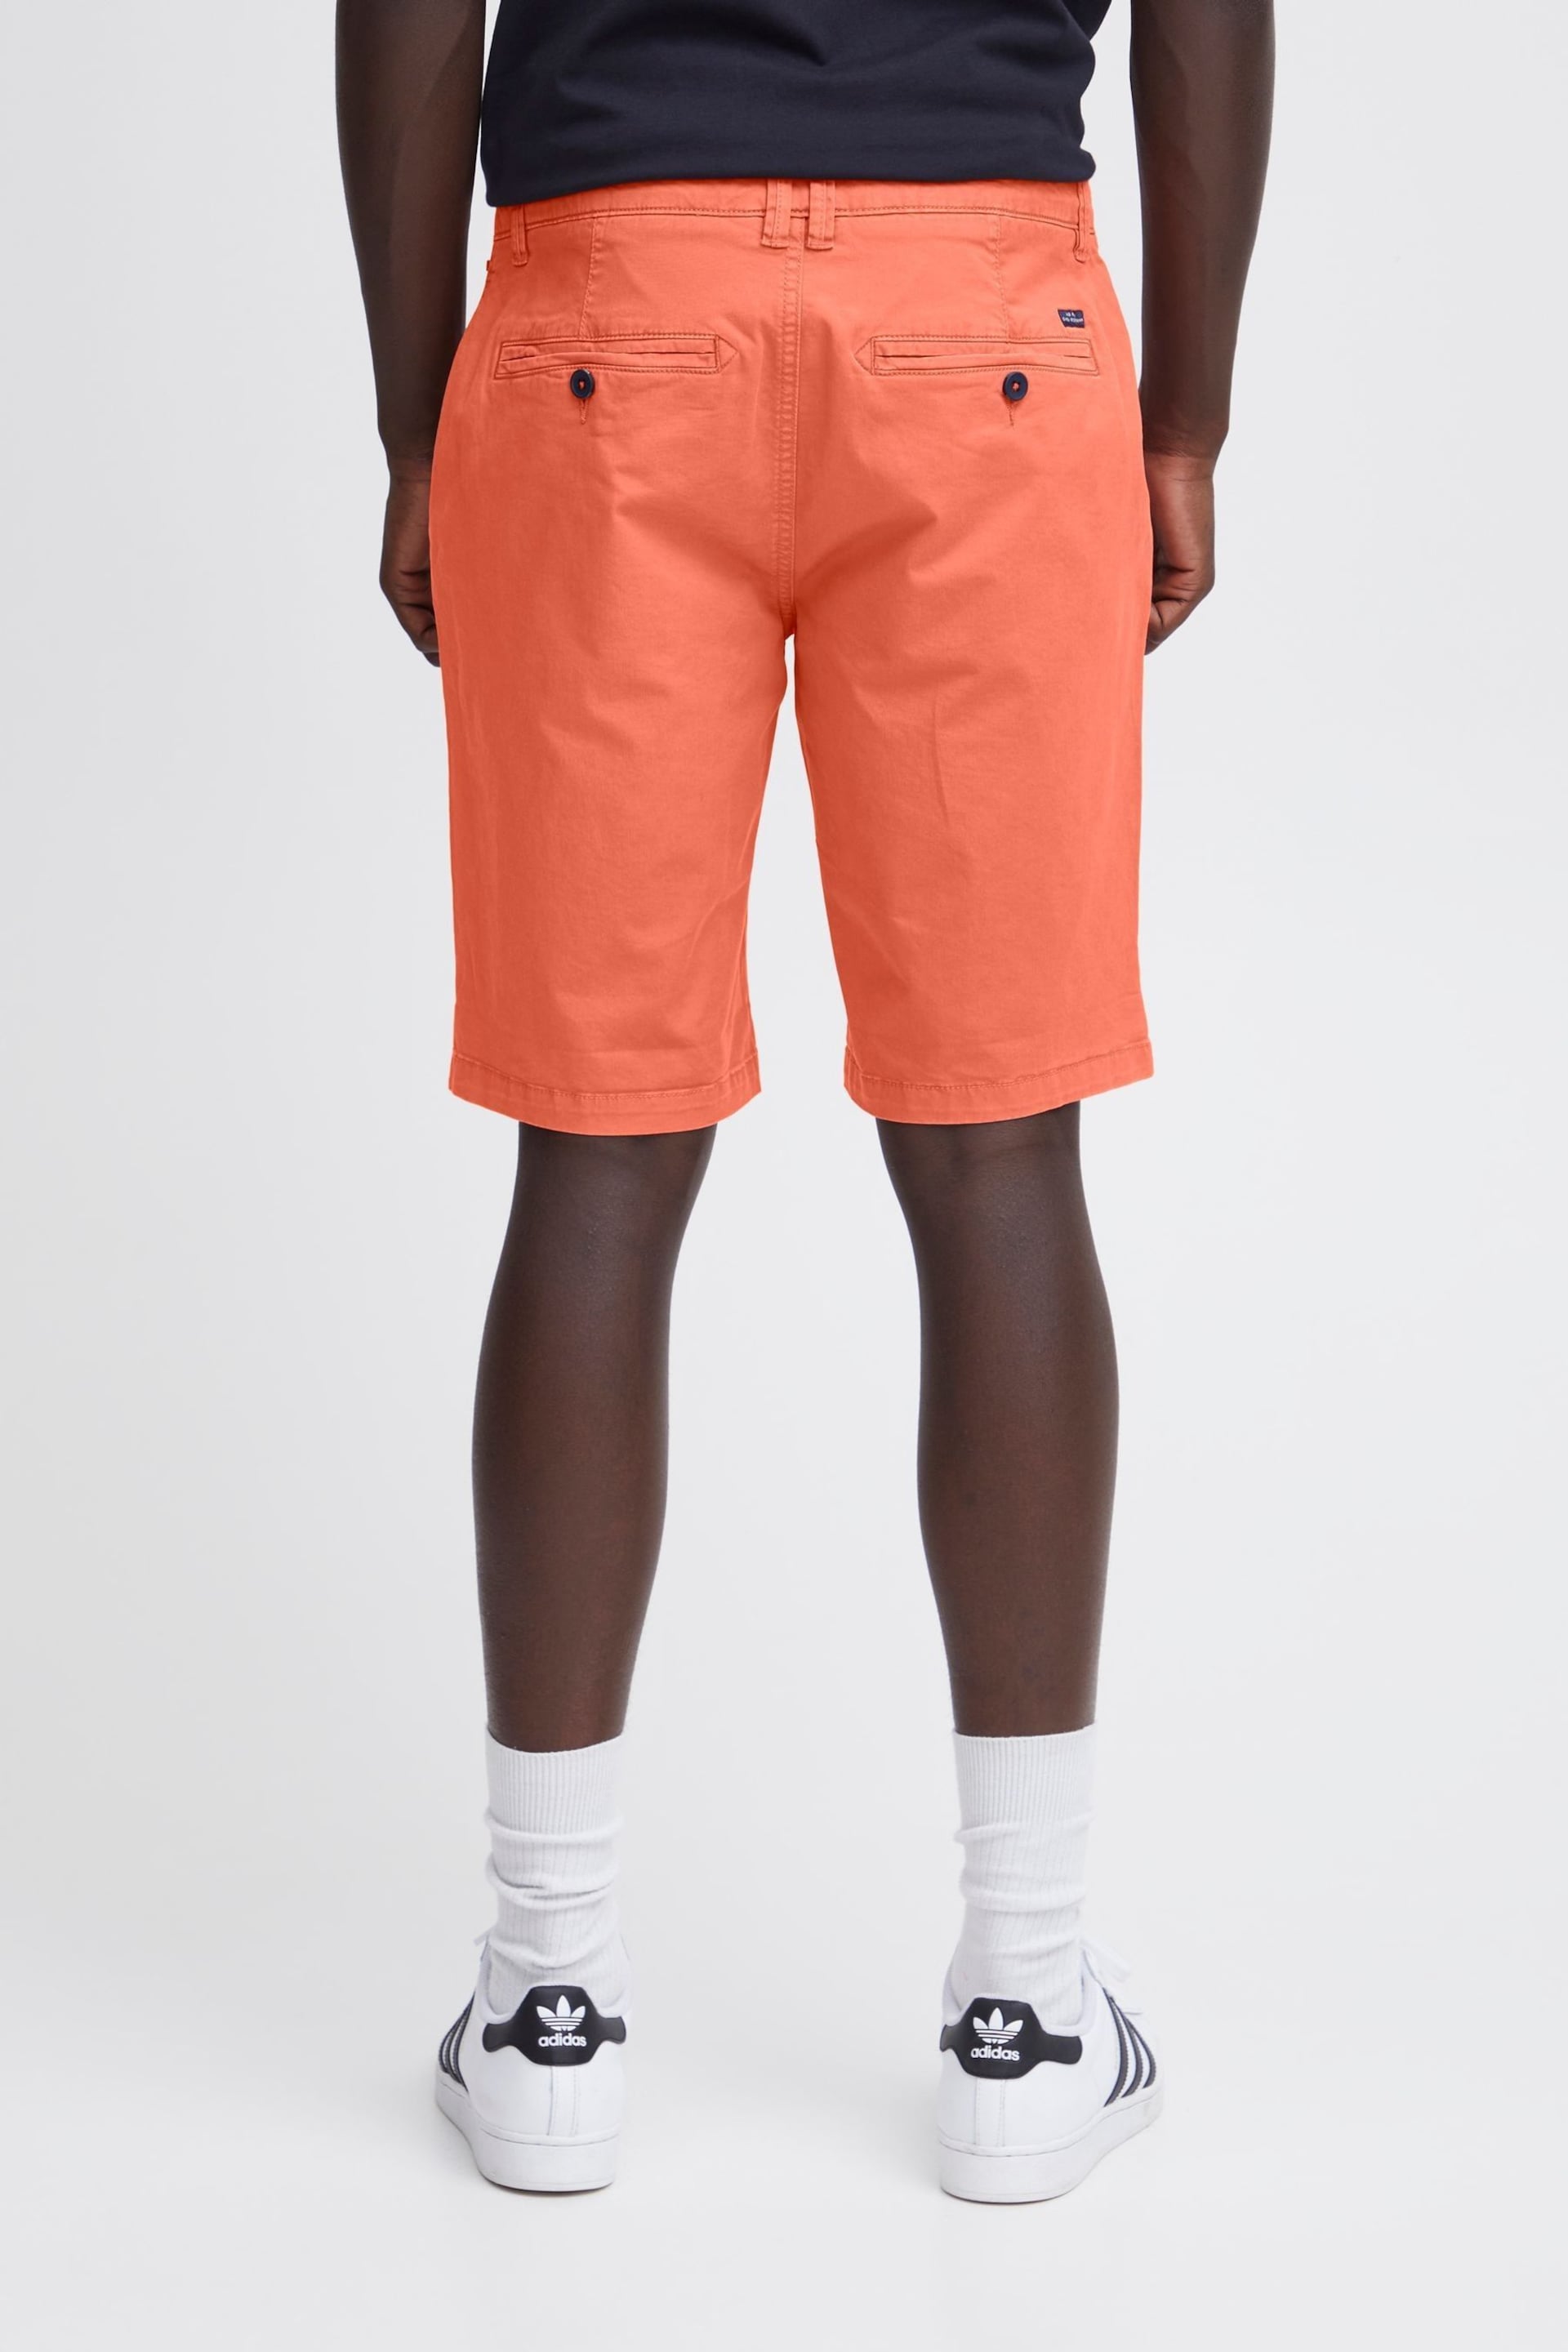 Blend Borangfe Stretch Chino Shorts - Image 2 of 5